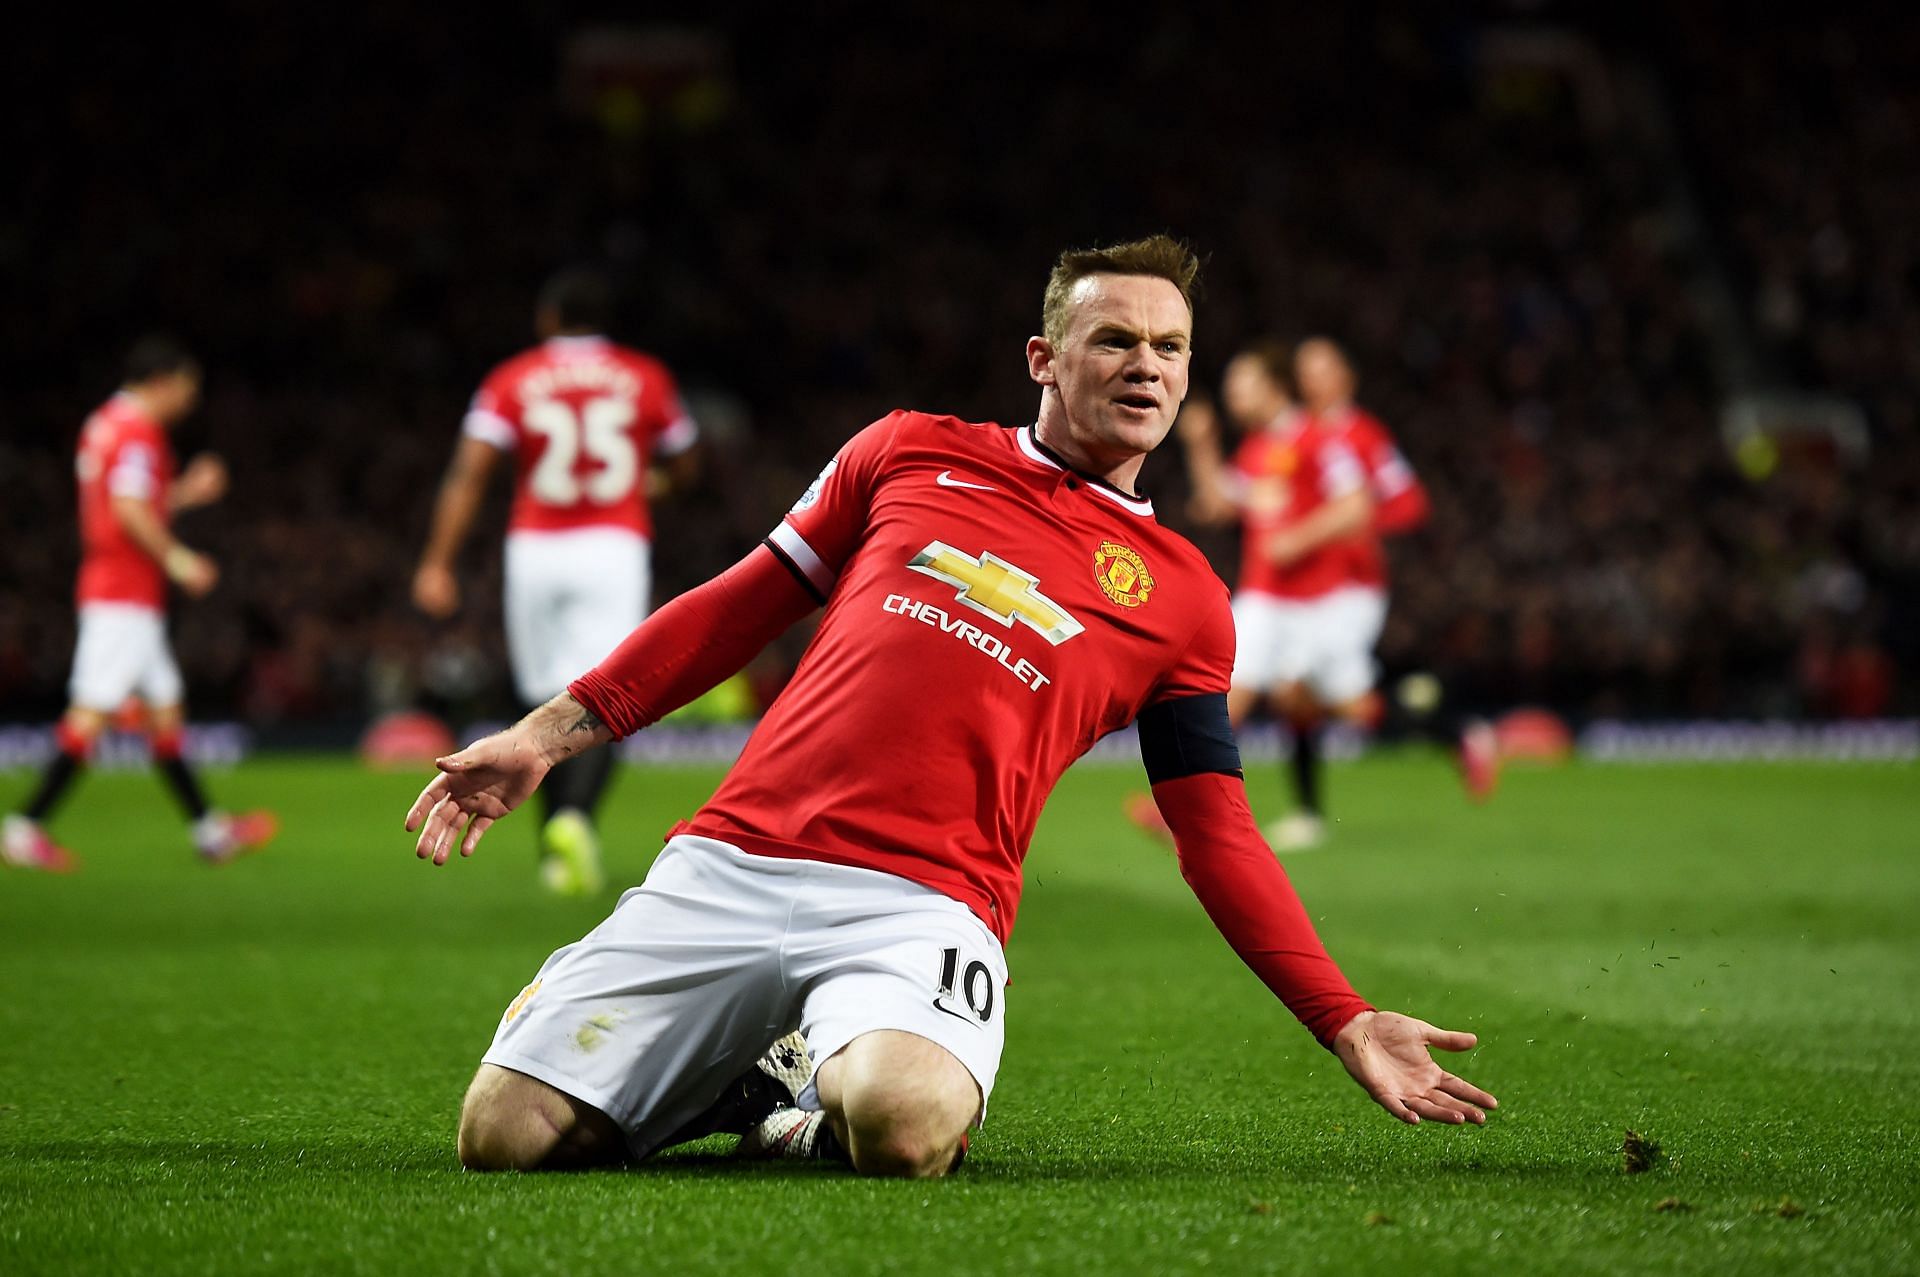 Wayne Rooney lit up English football.